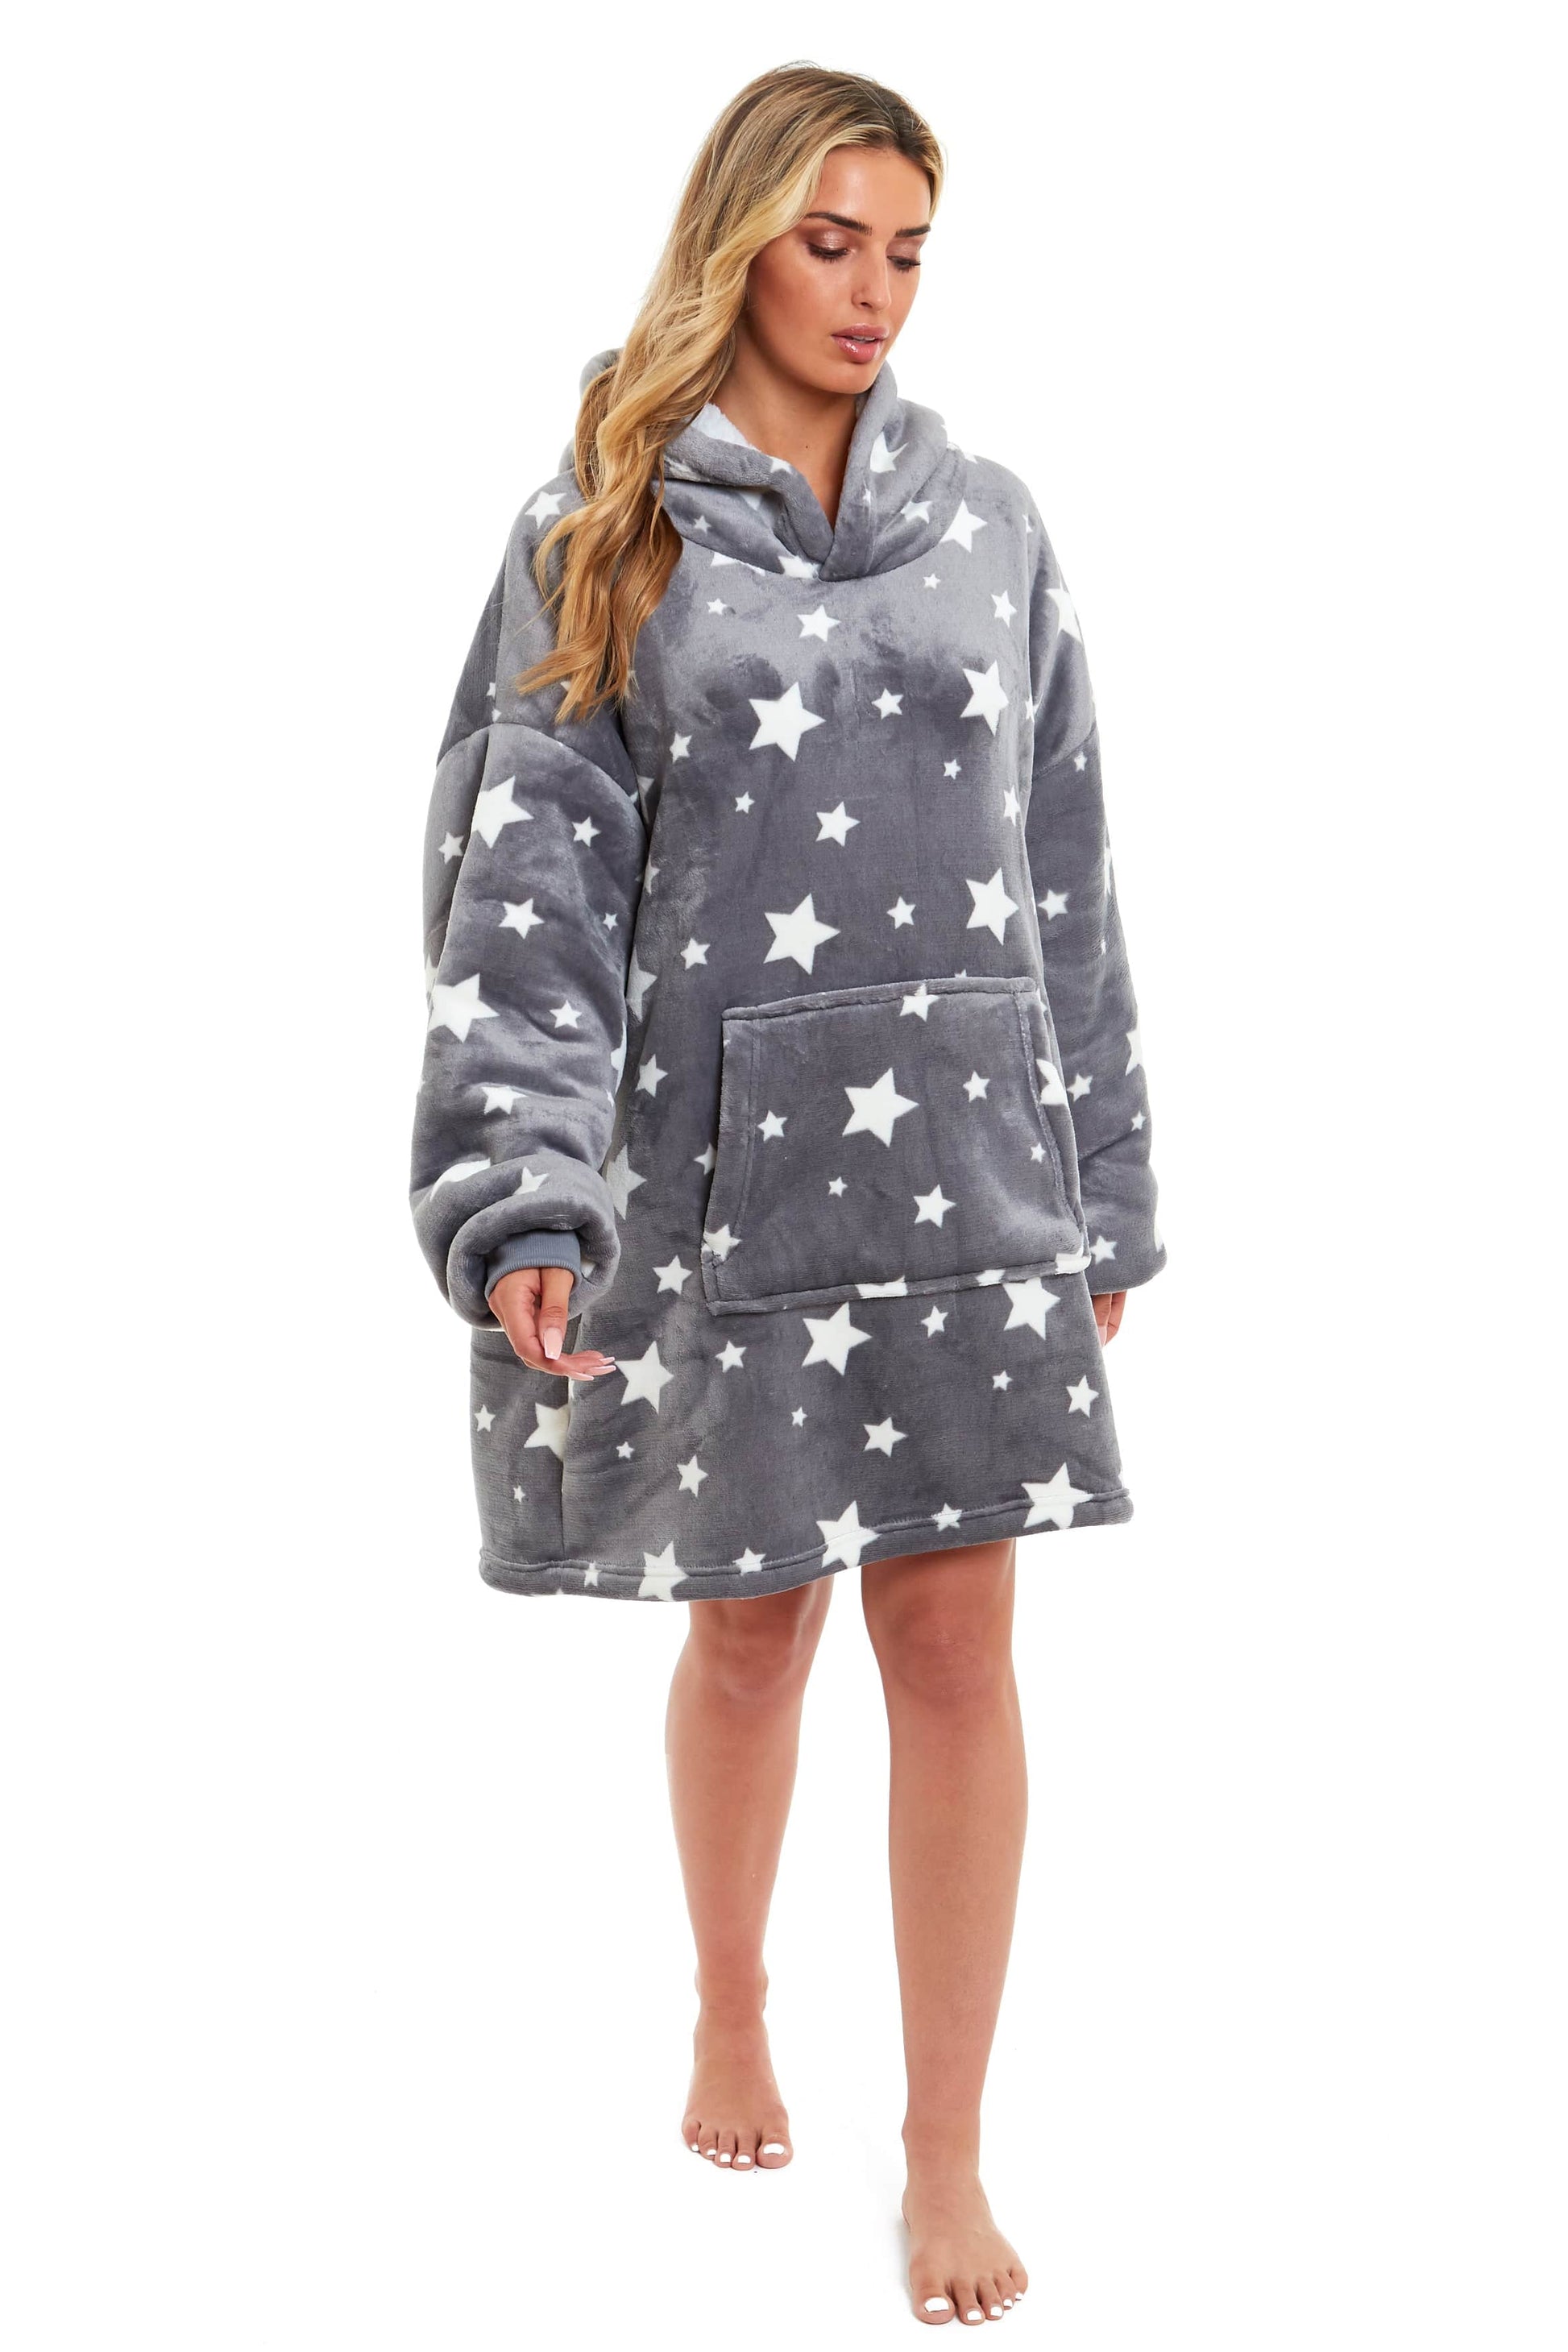 Oversized Grey Stars Hooded Plush Fleece With Reversible Sherpa Blanket OLIVIA ROCCO Hooded Blanket